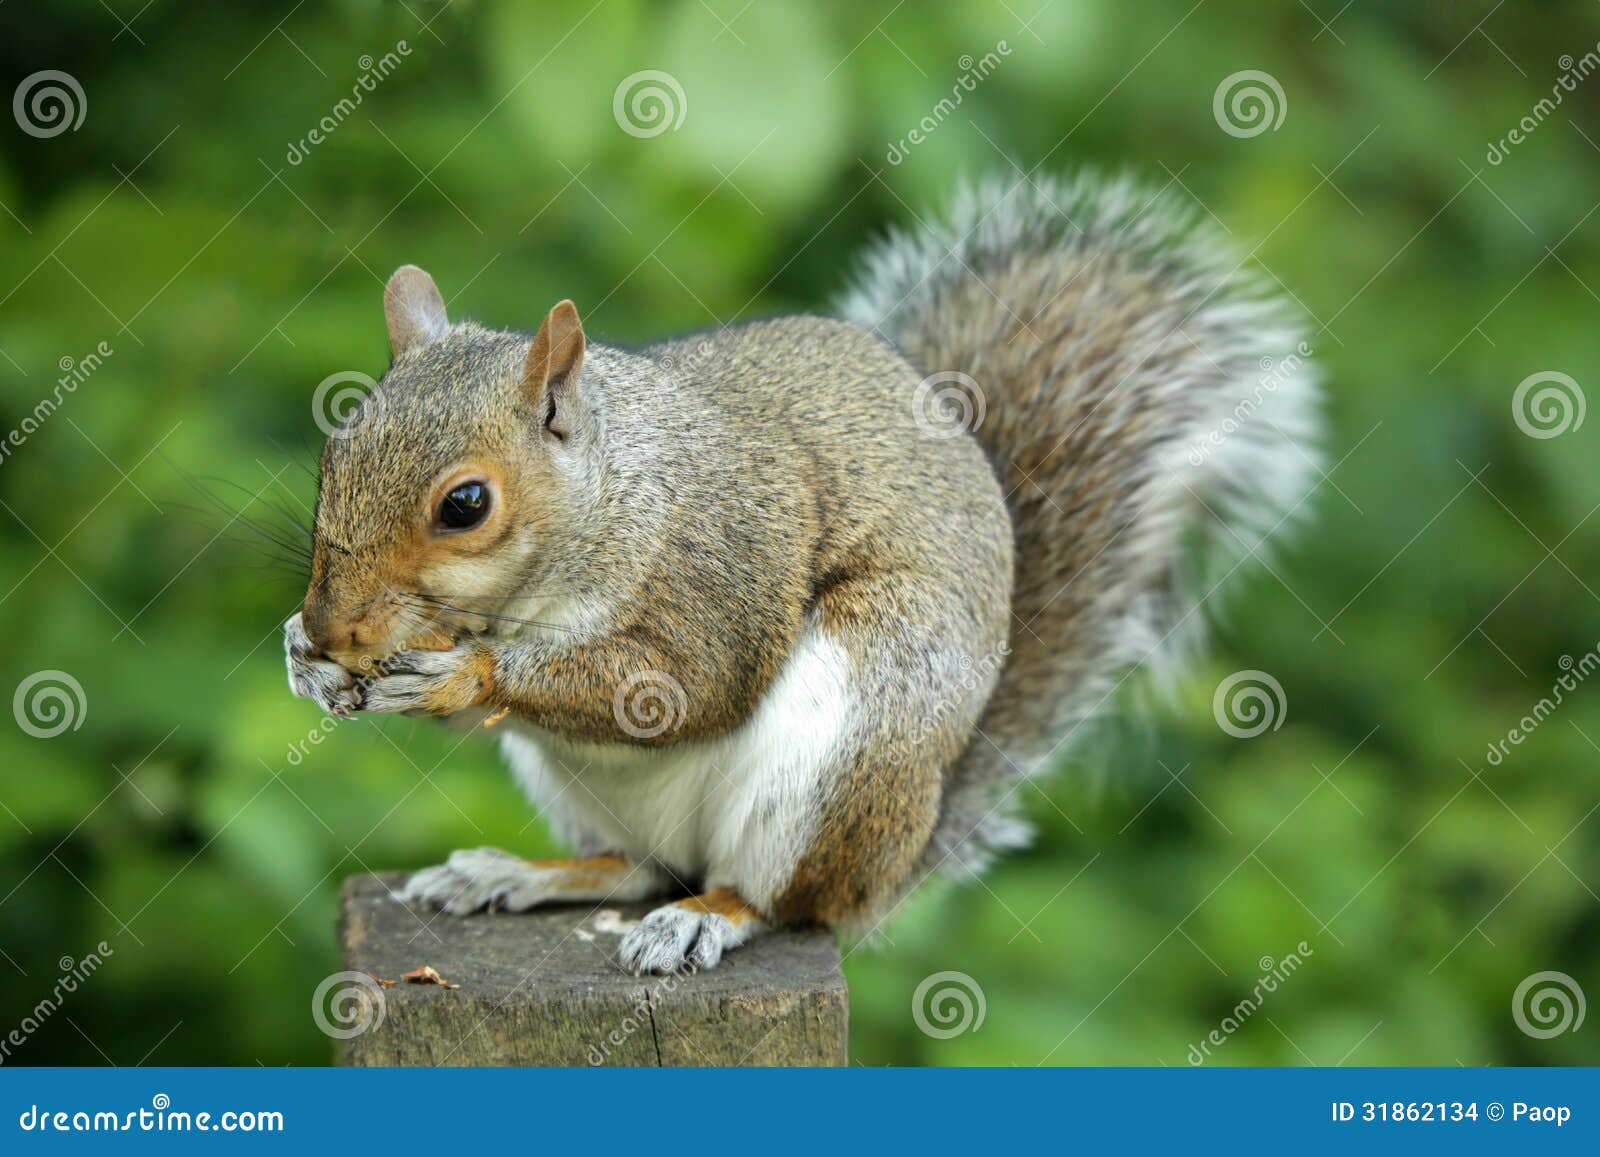 Squirrel Eating Porn Pix